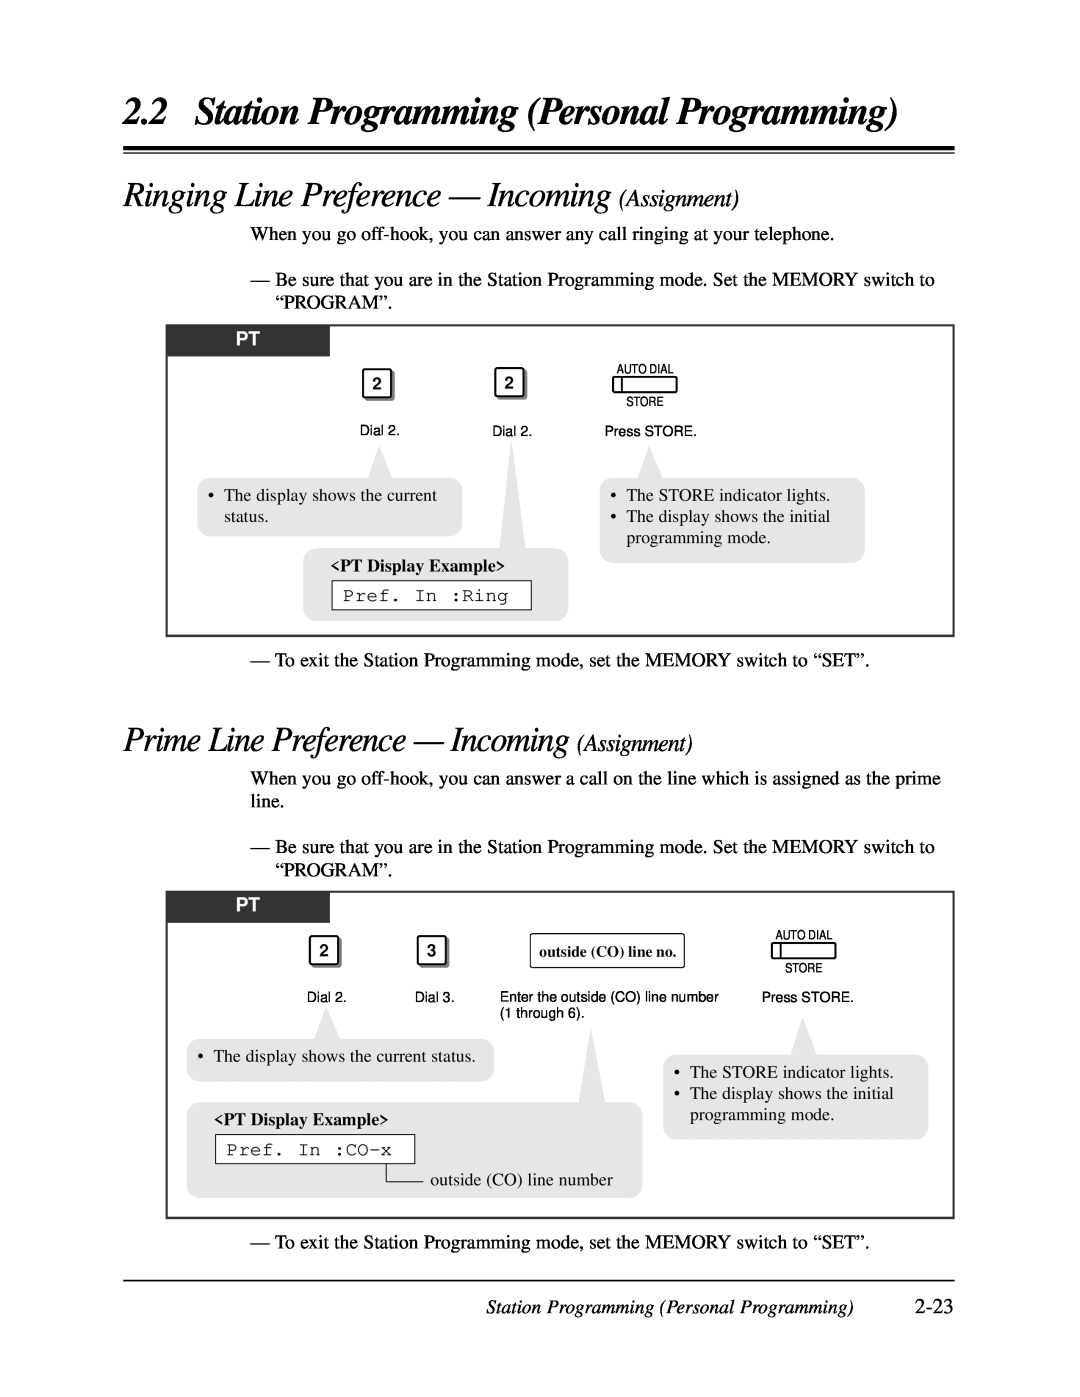 Panasonic KX-TA624 Ringing Line Preference - Incoming Assignment, Prime Line Preference — Incoming Assignment, 2-23 